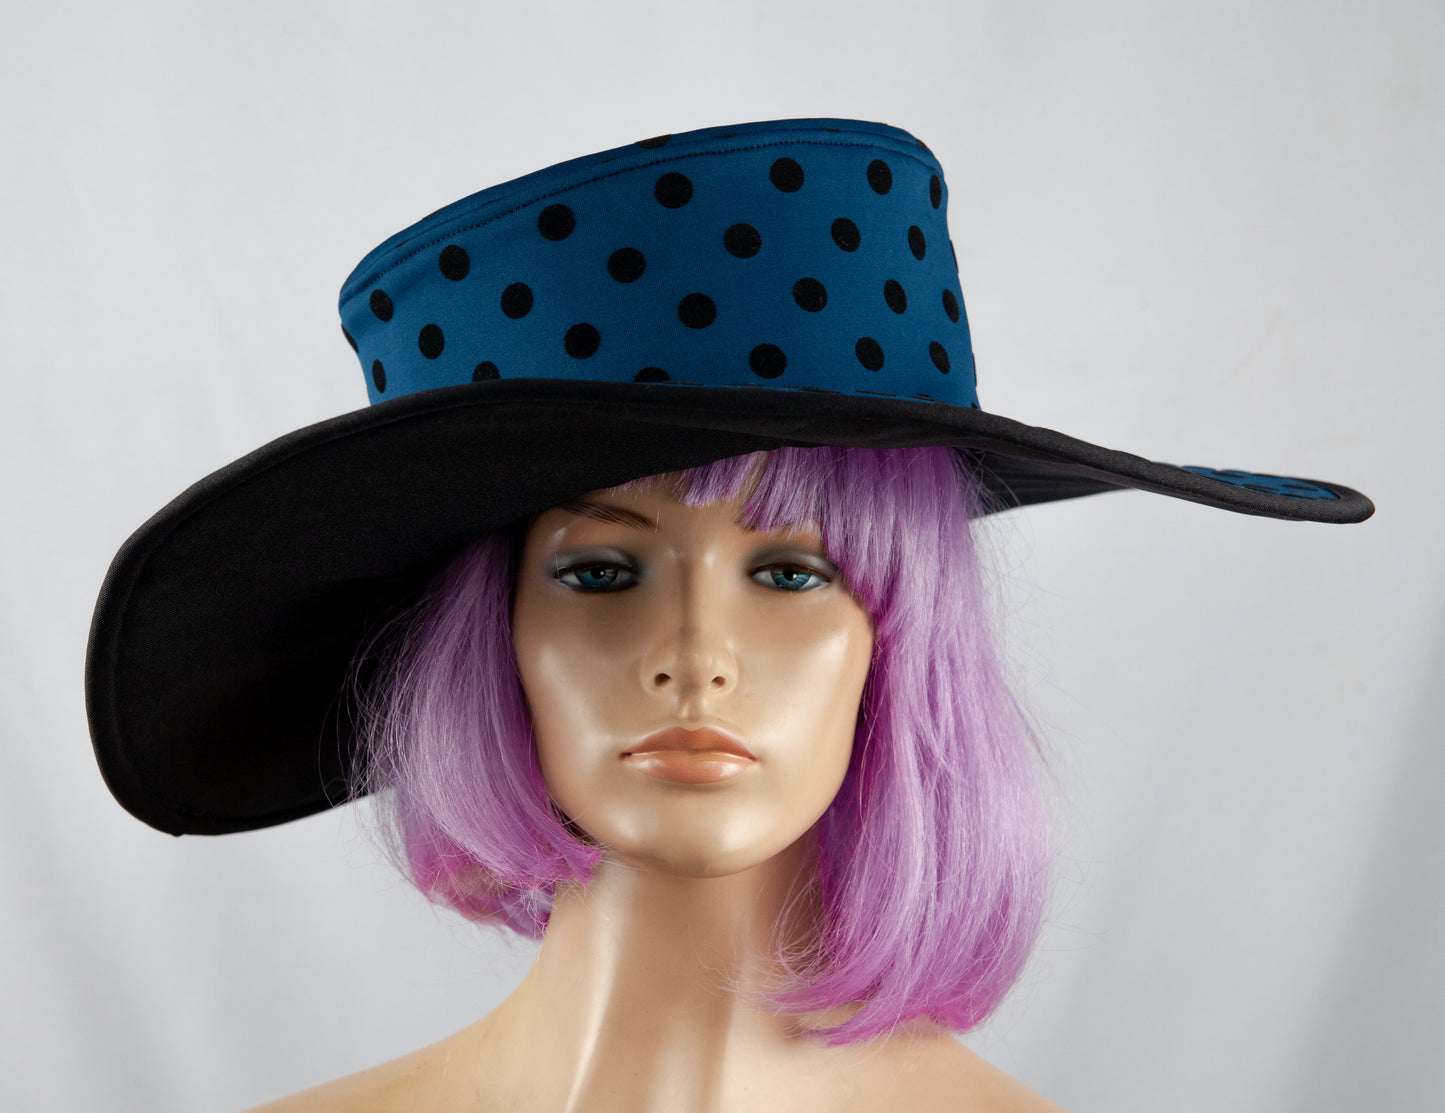 Durban July Fashion Hat - blue with black spots